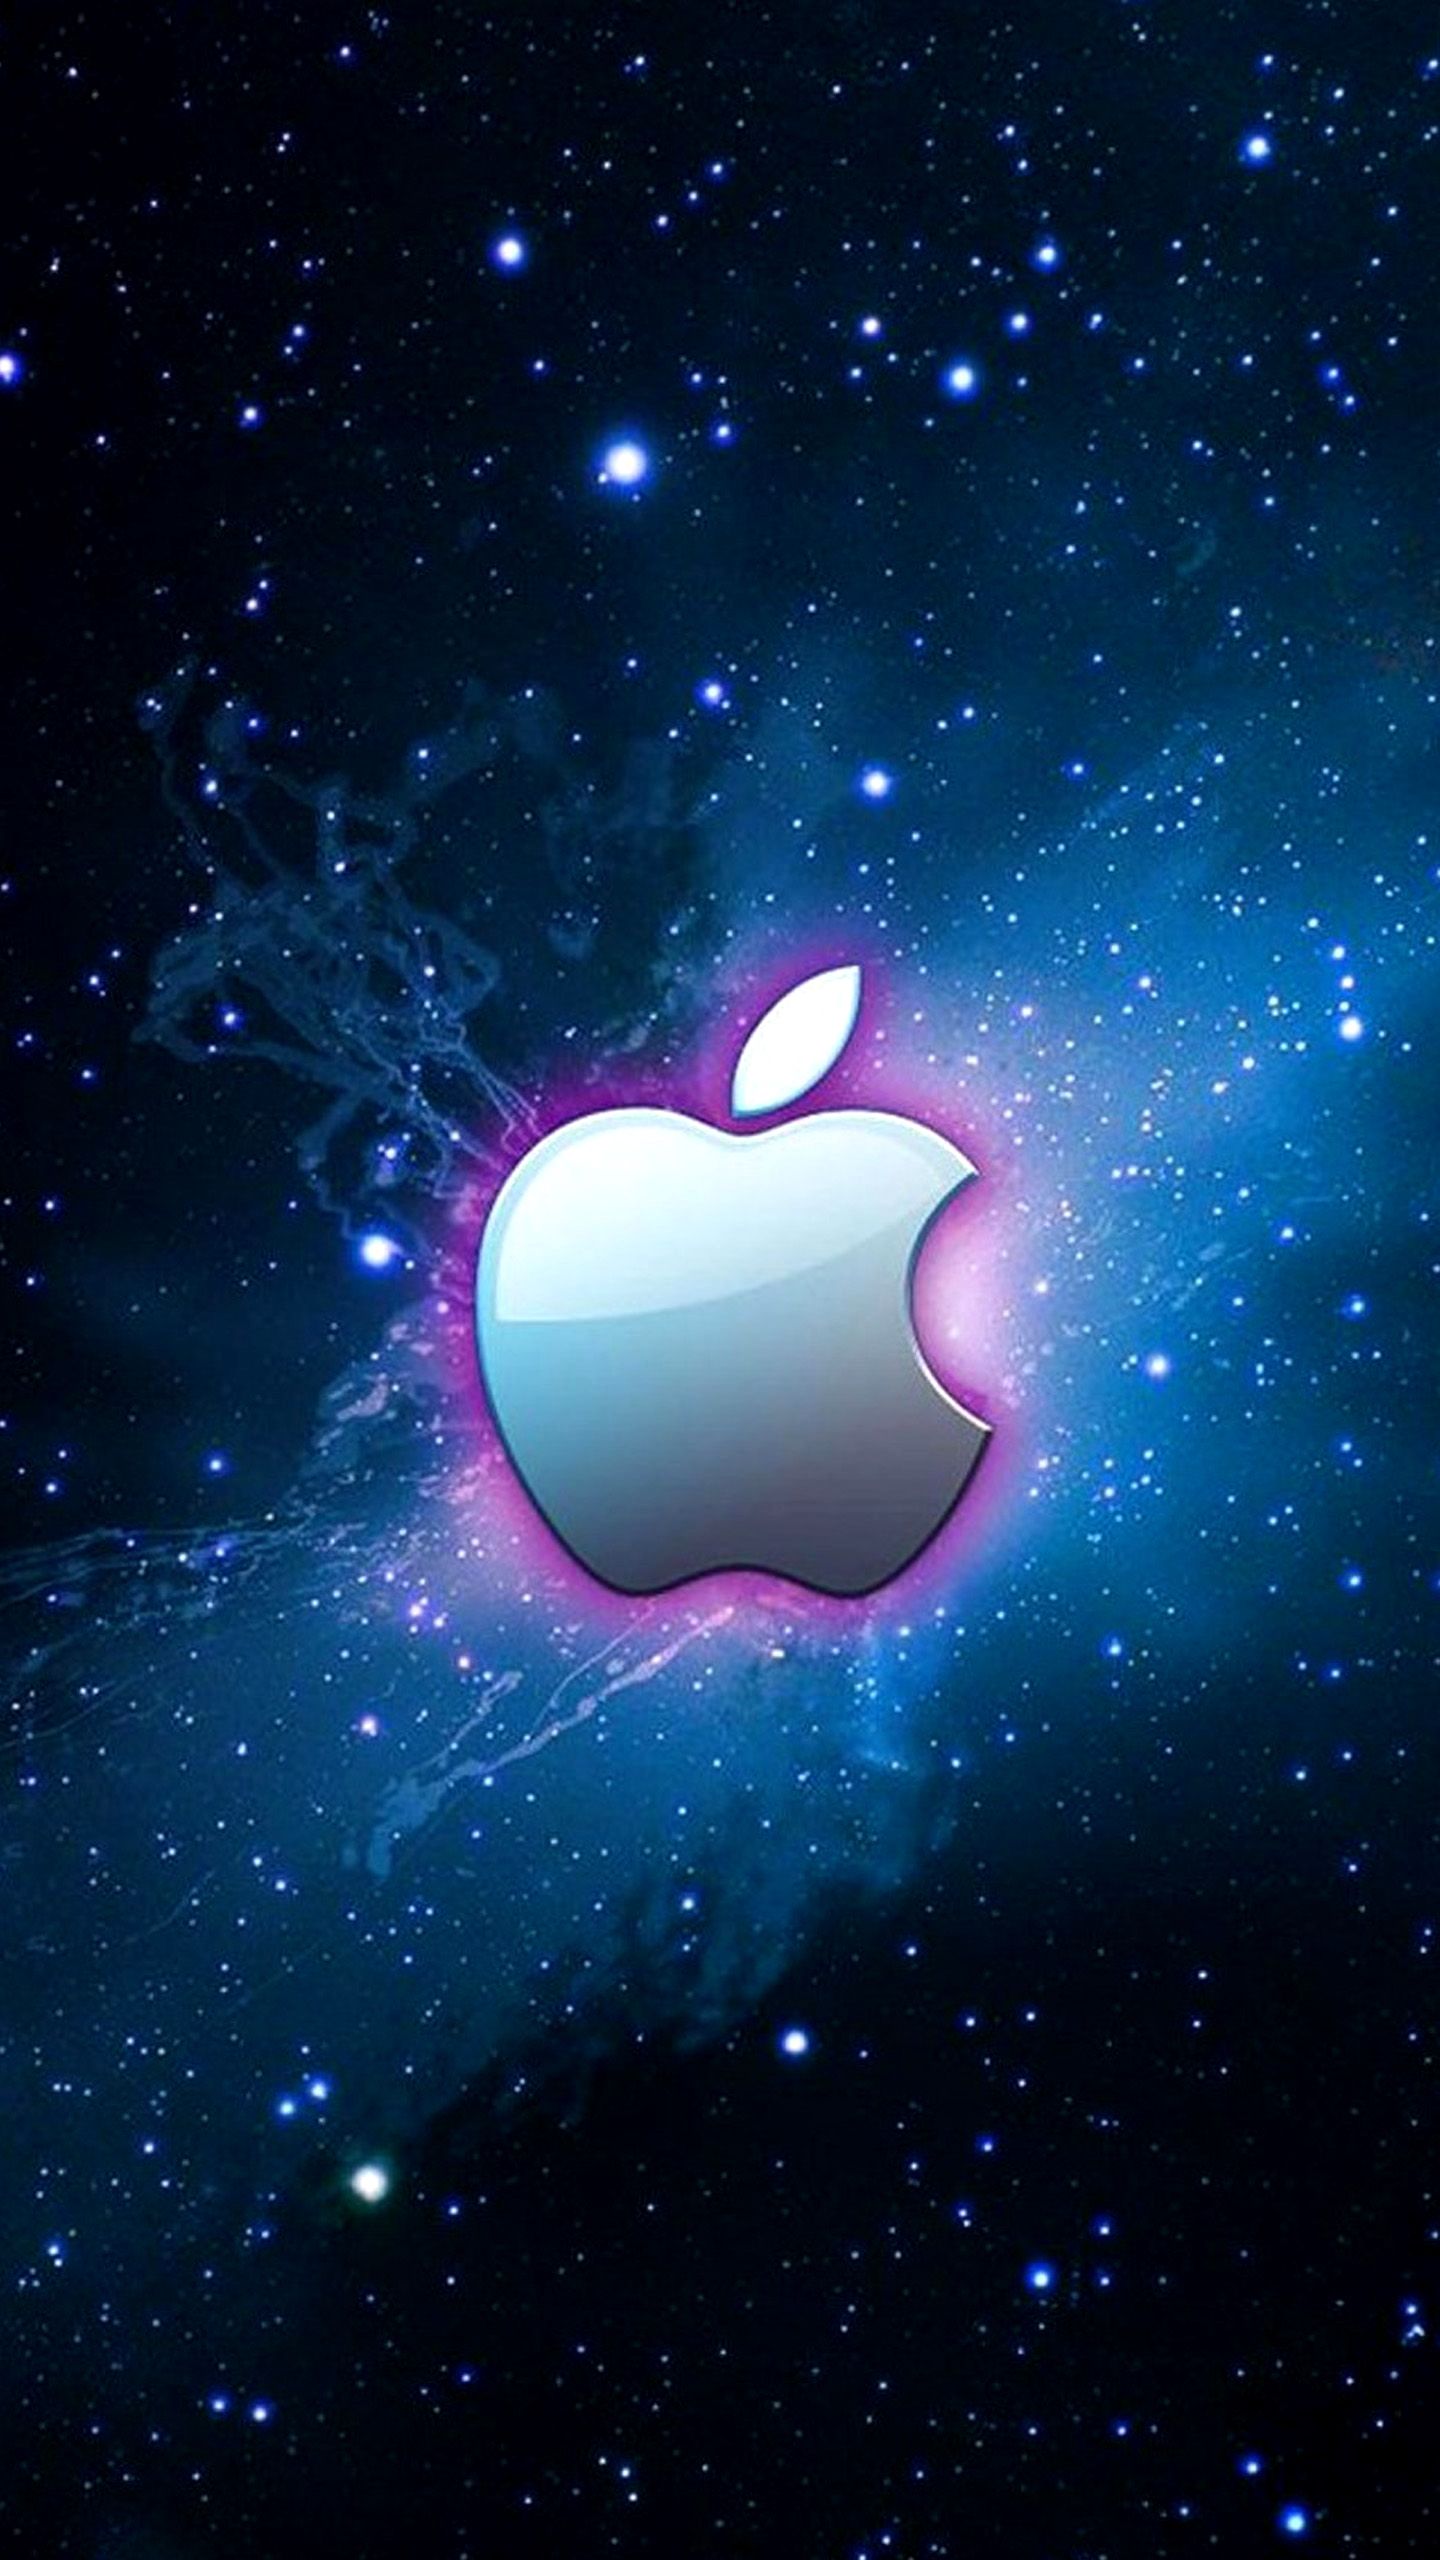 iPhone Wallpaper 4K Apple Logo Ideas. Apple wallpaper, Apple wallpaper iphone, Apple logo wallpaper iphone